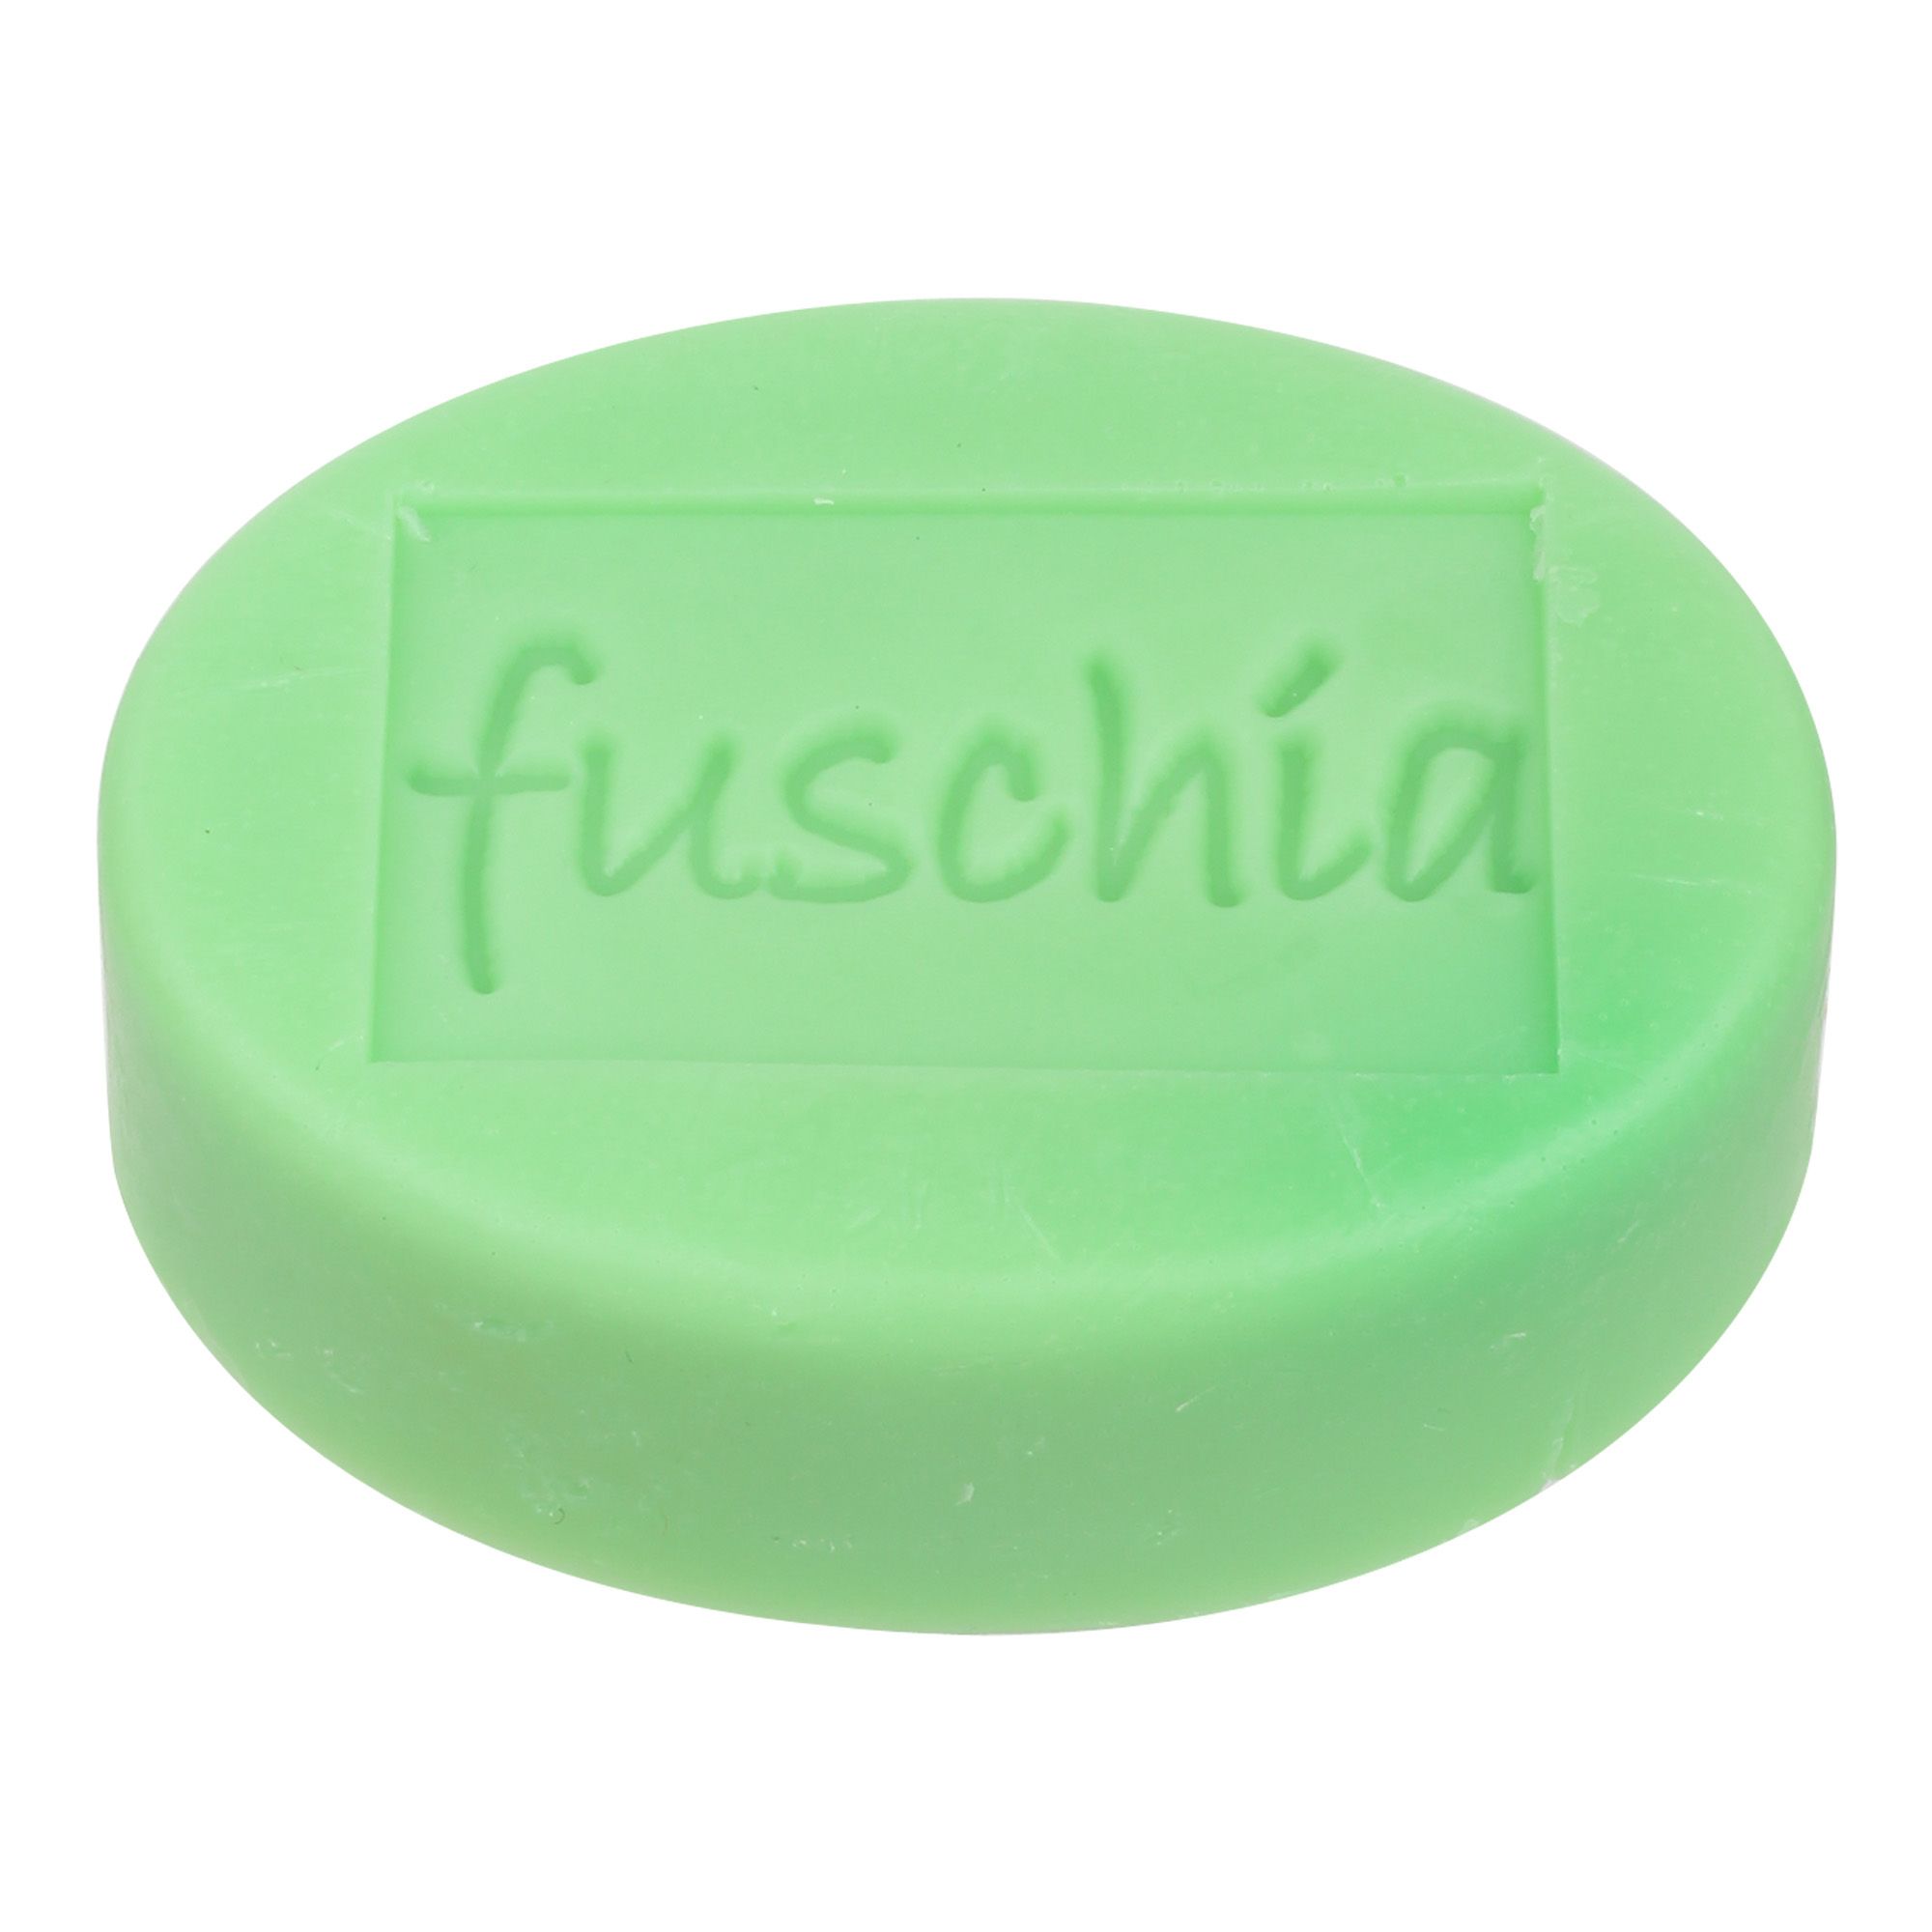 fuschia-woody-khus-natural-handmade-glycerine-soap